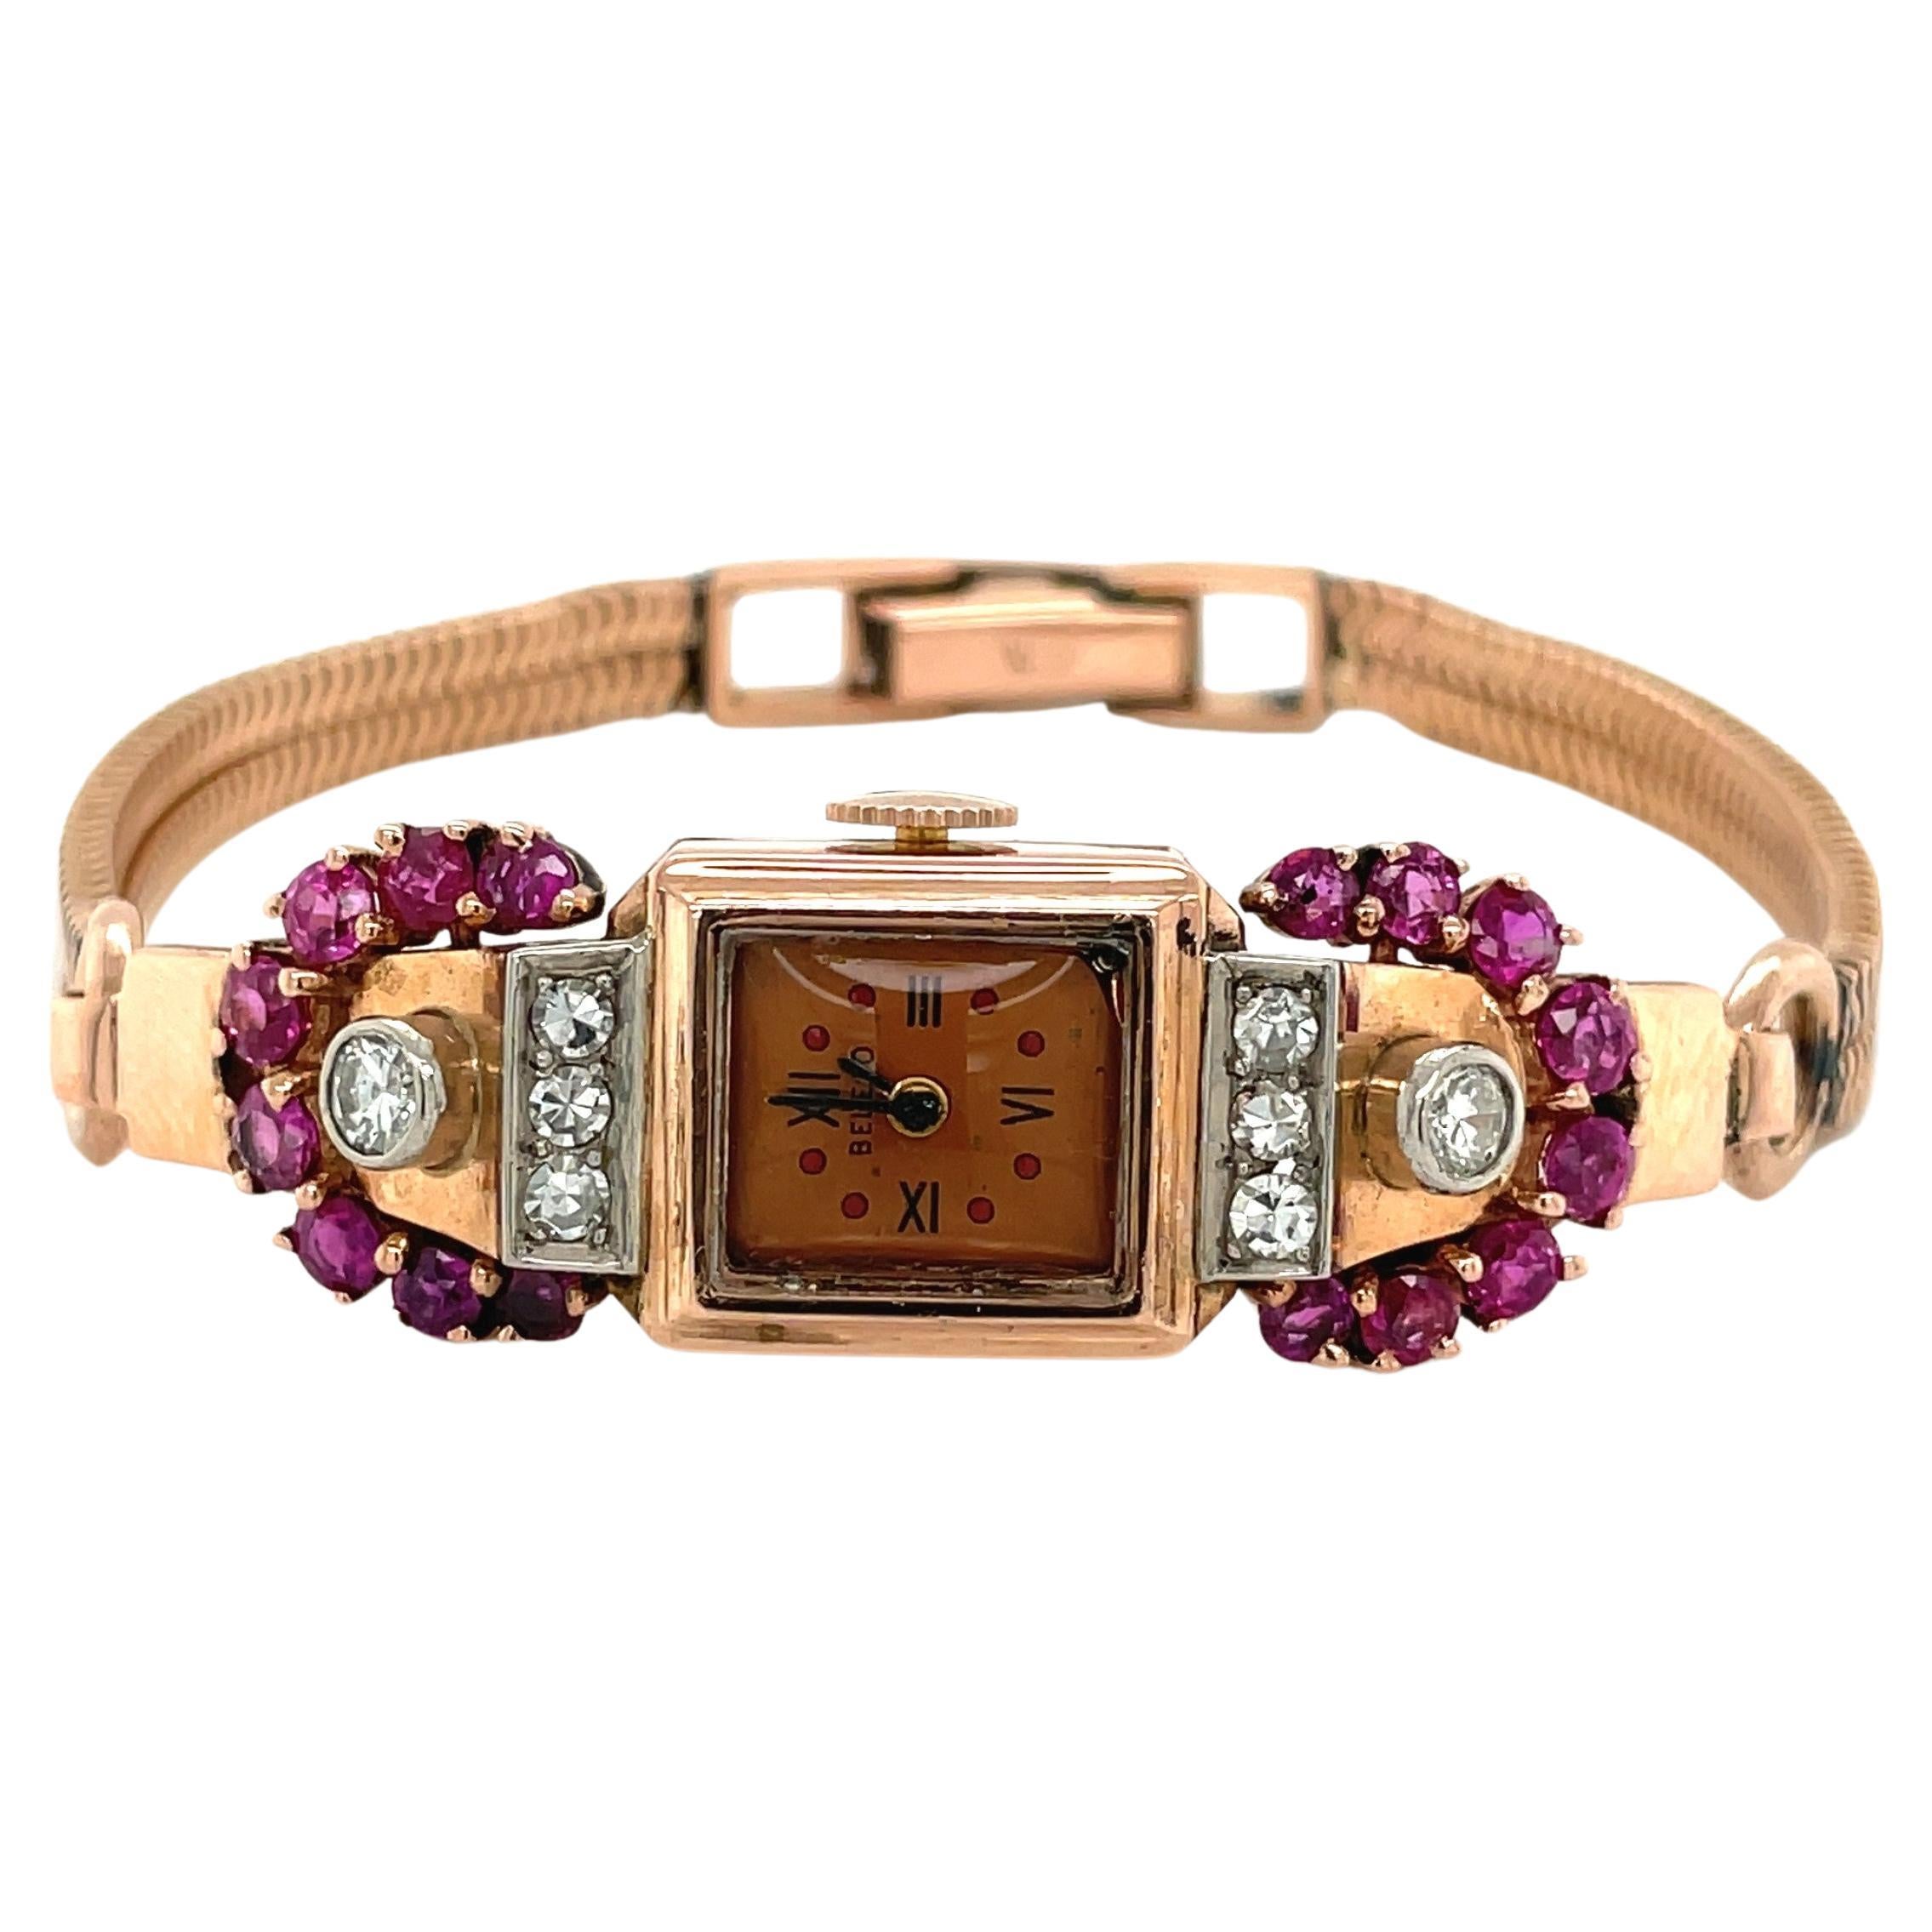 Ruby Diamond 14 Karat Rose Gold Art Deco Bracelet Wrist Watch